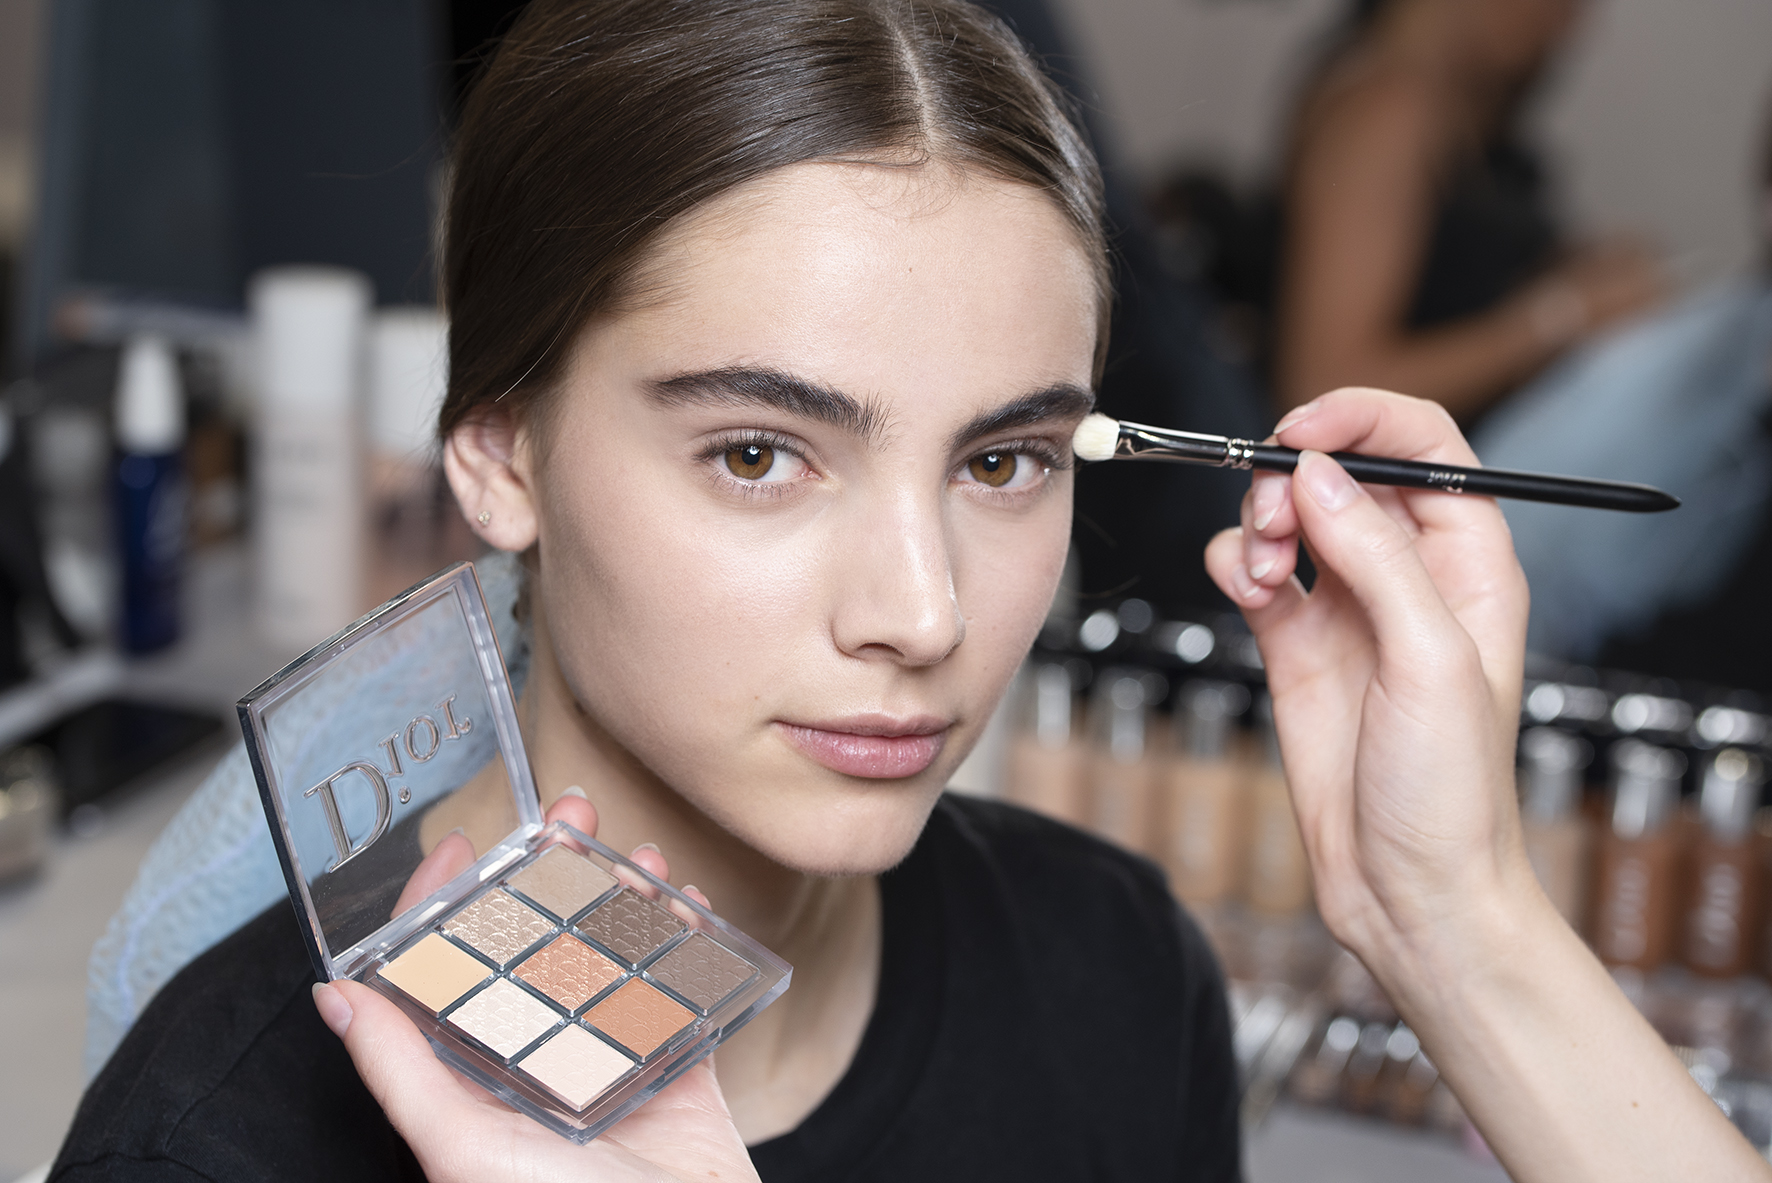 dior beauty 2019